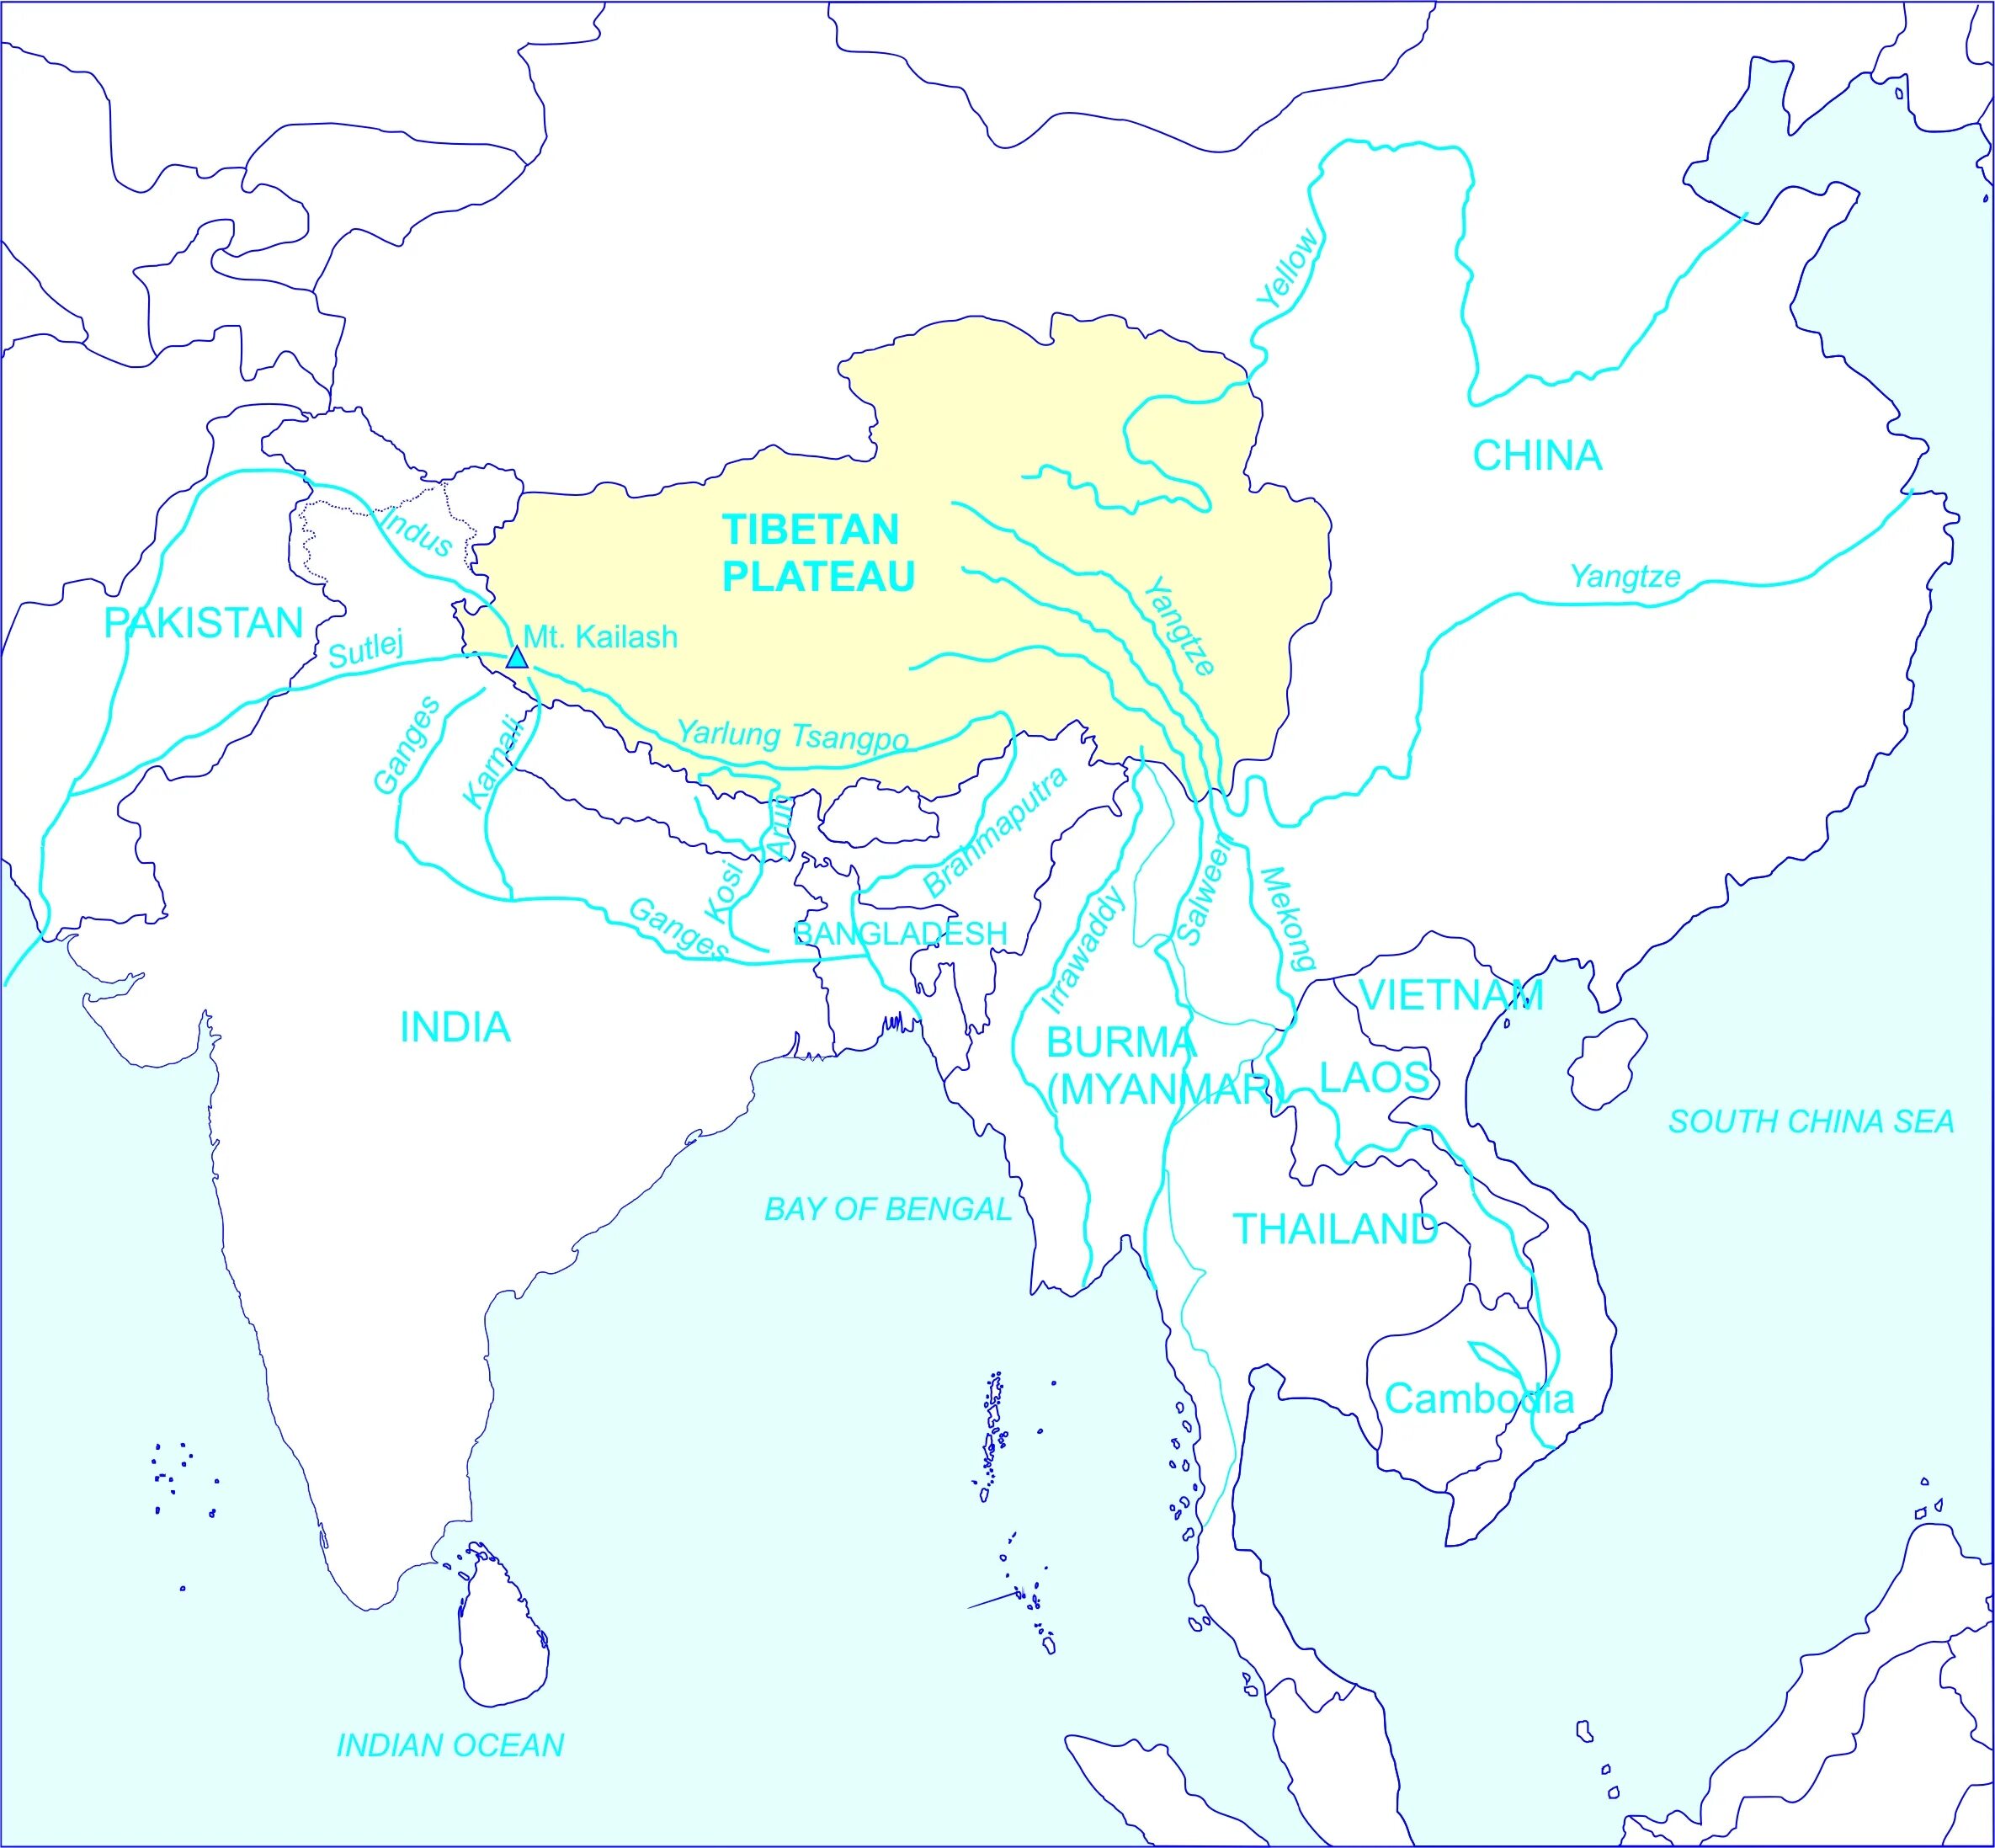 Реки и озера азии. Реки Азии на карте. Основные реки зарубежной Азии на карте. Крупные реки зарубежной Азии на карте. Крупные реки Азии на карте.